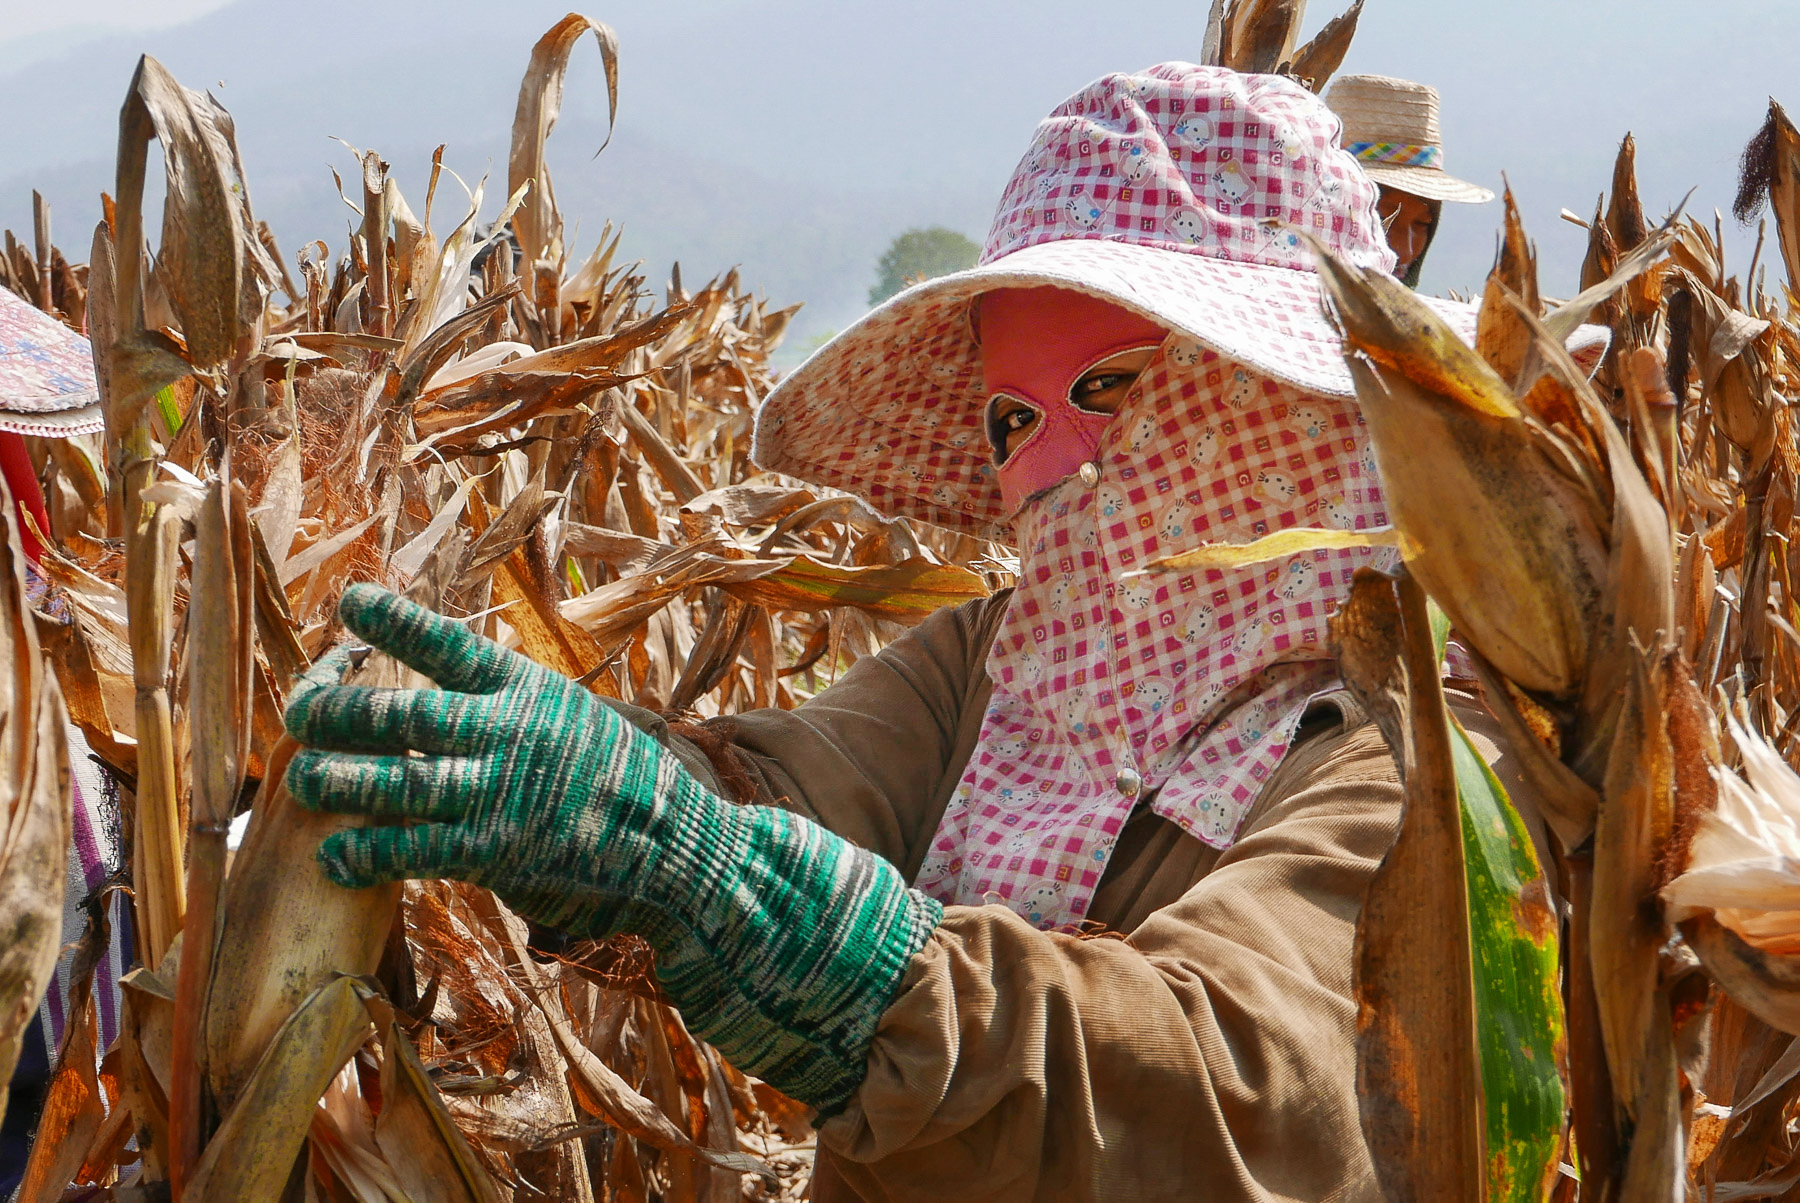 Corn picker, Mae Sariang, Northern Thailand (photo by Irina Stelea)